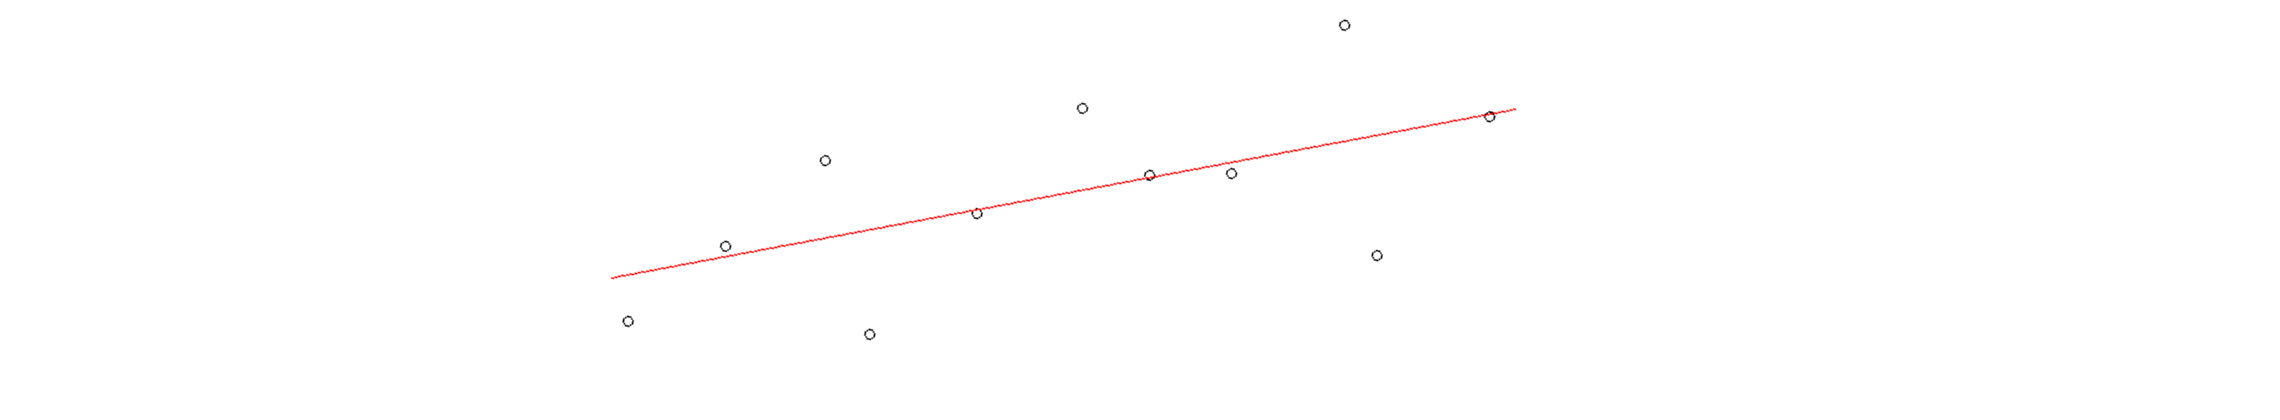 Example: Simple Bivariate Linear Regression